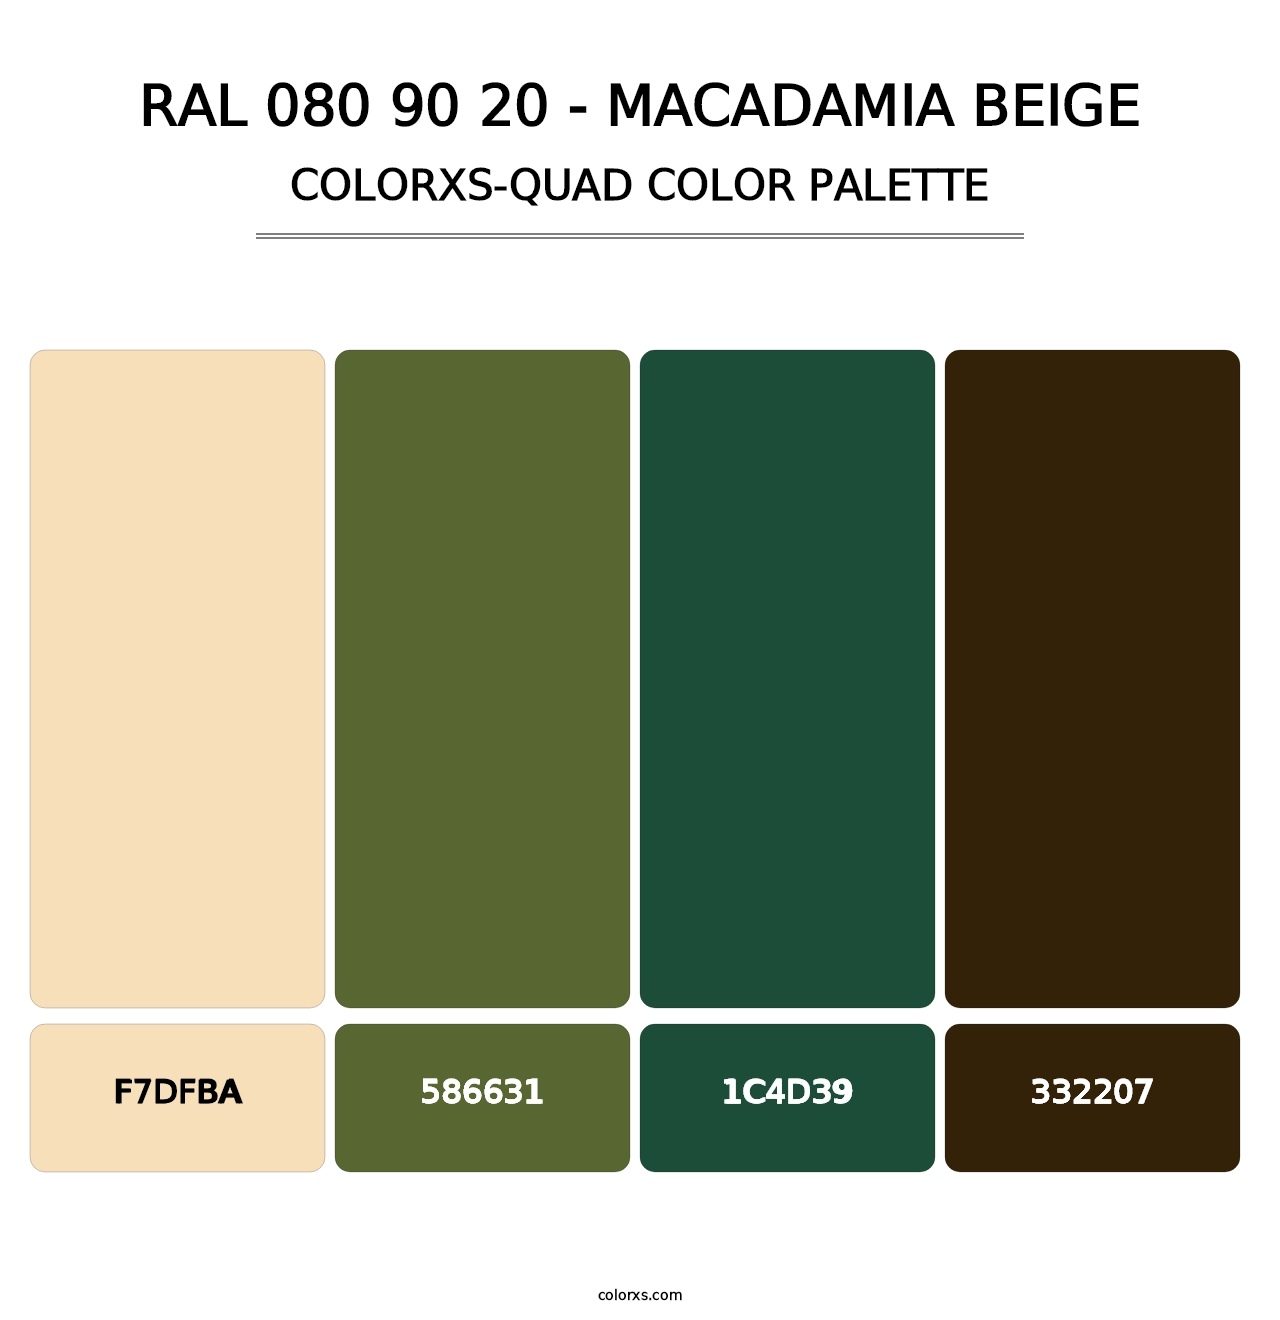 RAL 080 90 20 - Macadamia Beige - Colorxs Quad Palette